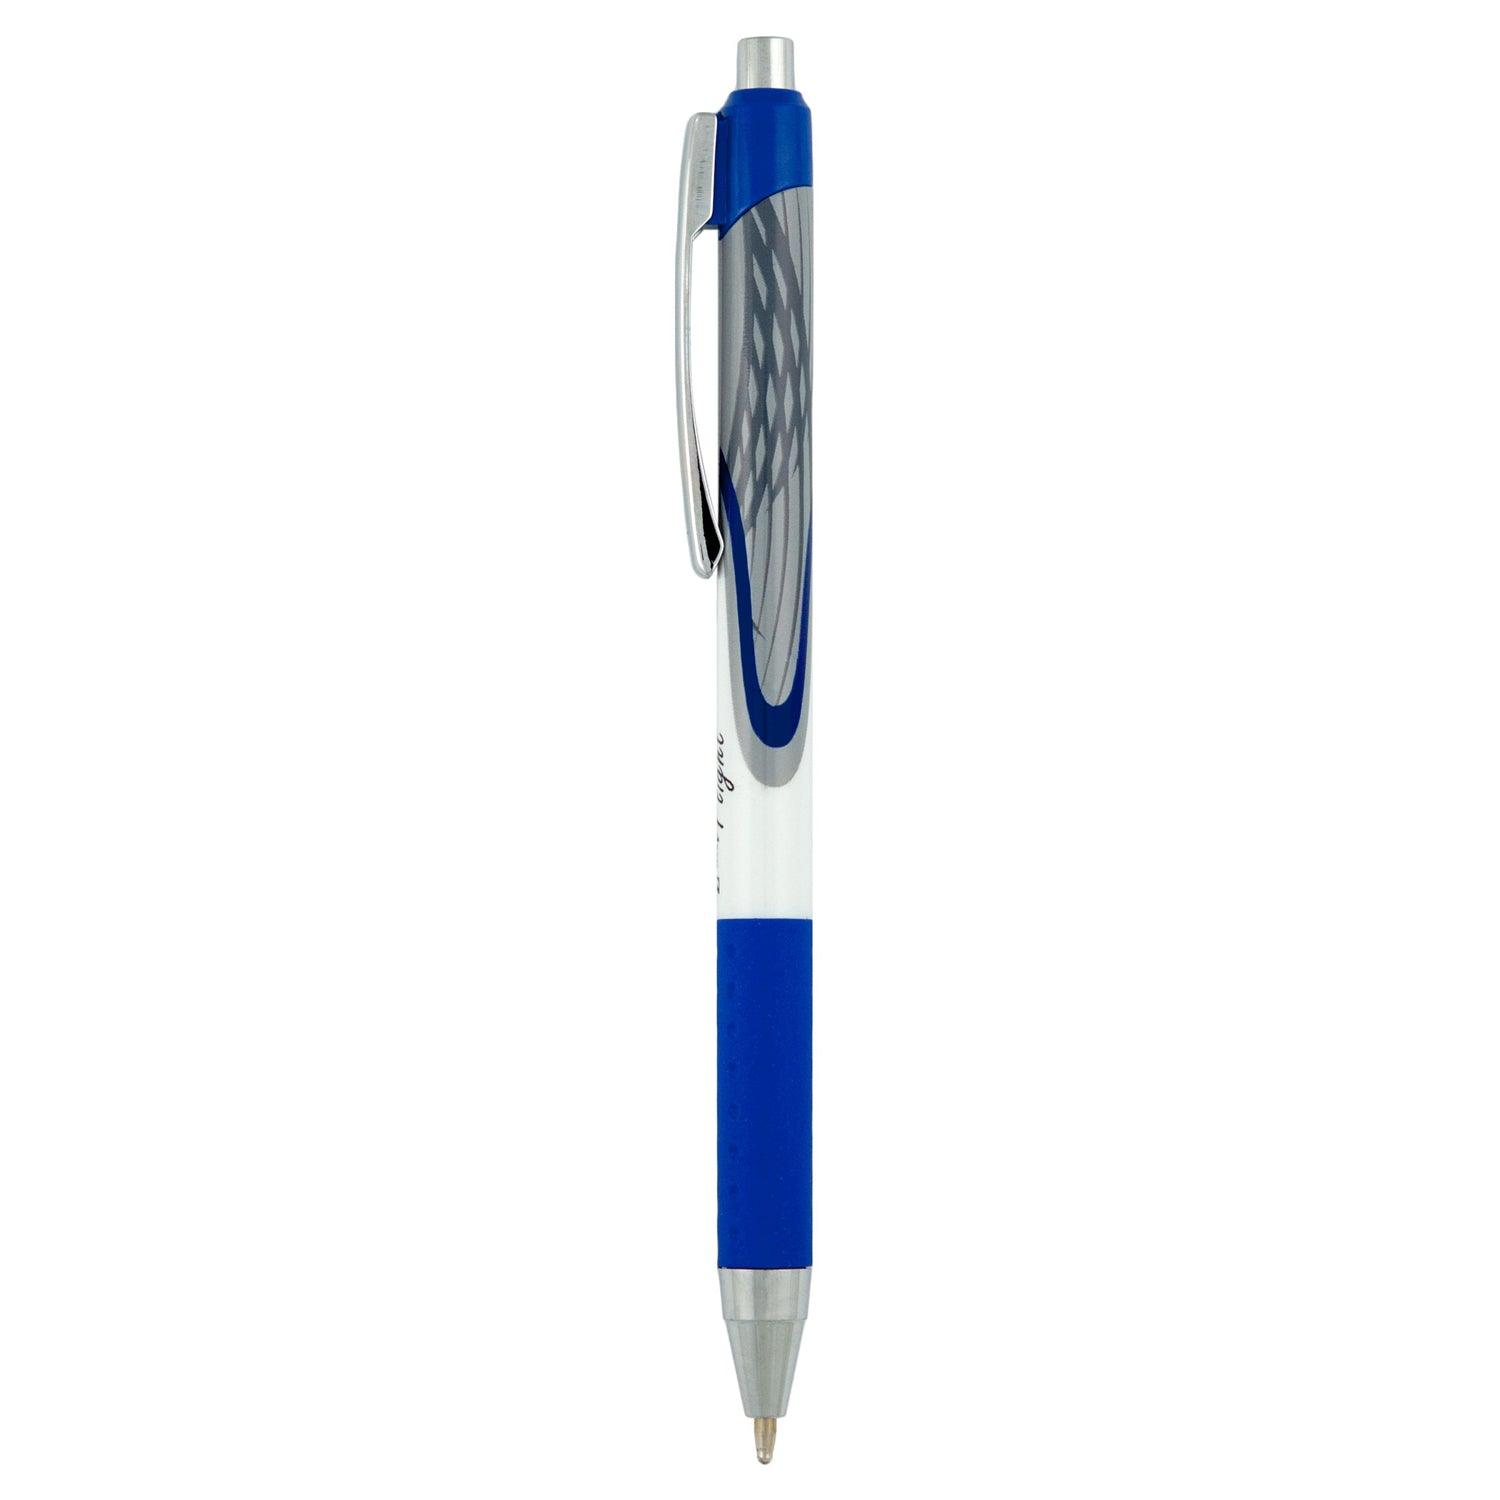 Z-Grip® Flight Retractable Ballpoint Pens, Blue, Dozen - Loomini